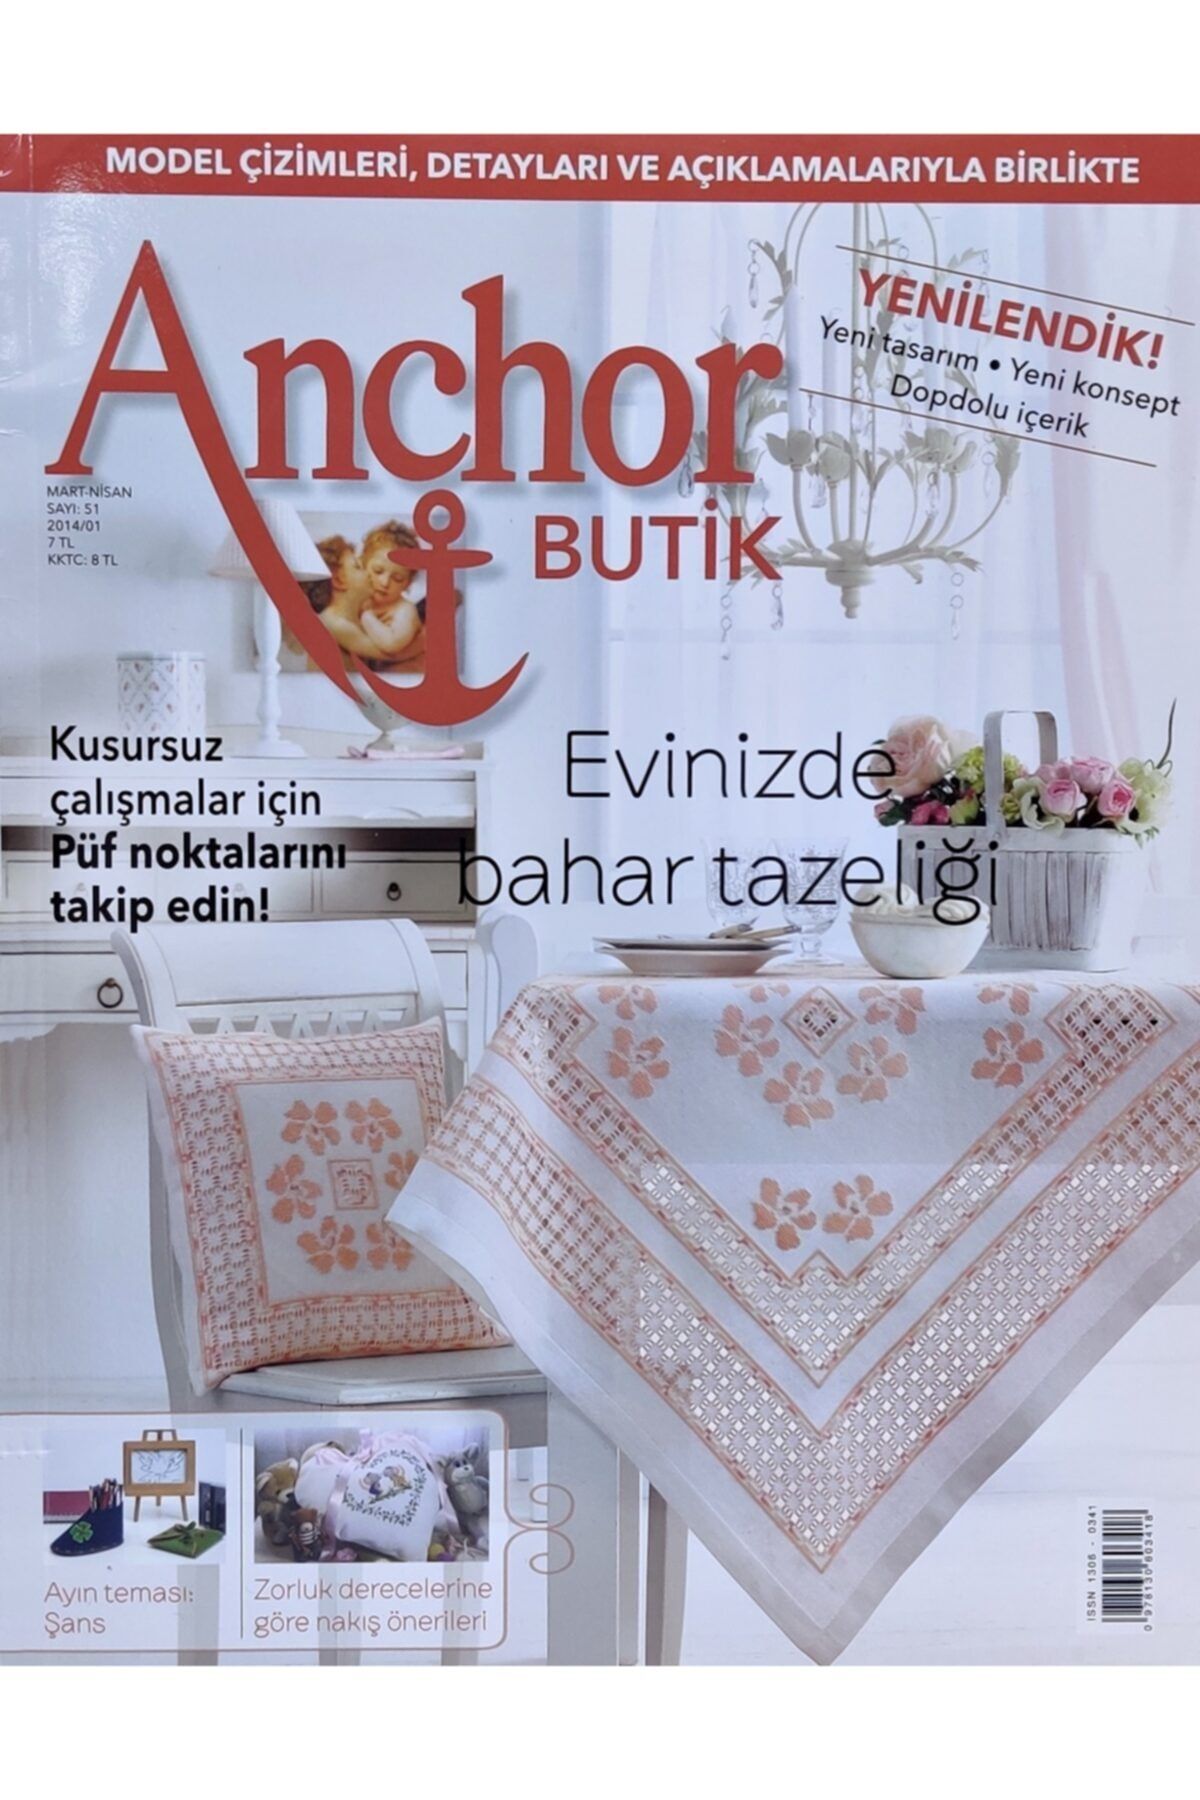 Anchor Butik Dergi 2014 Sayı 51